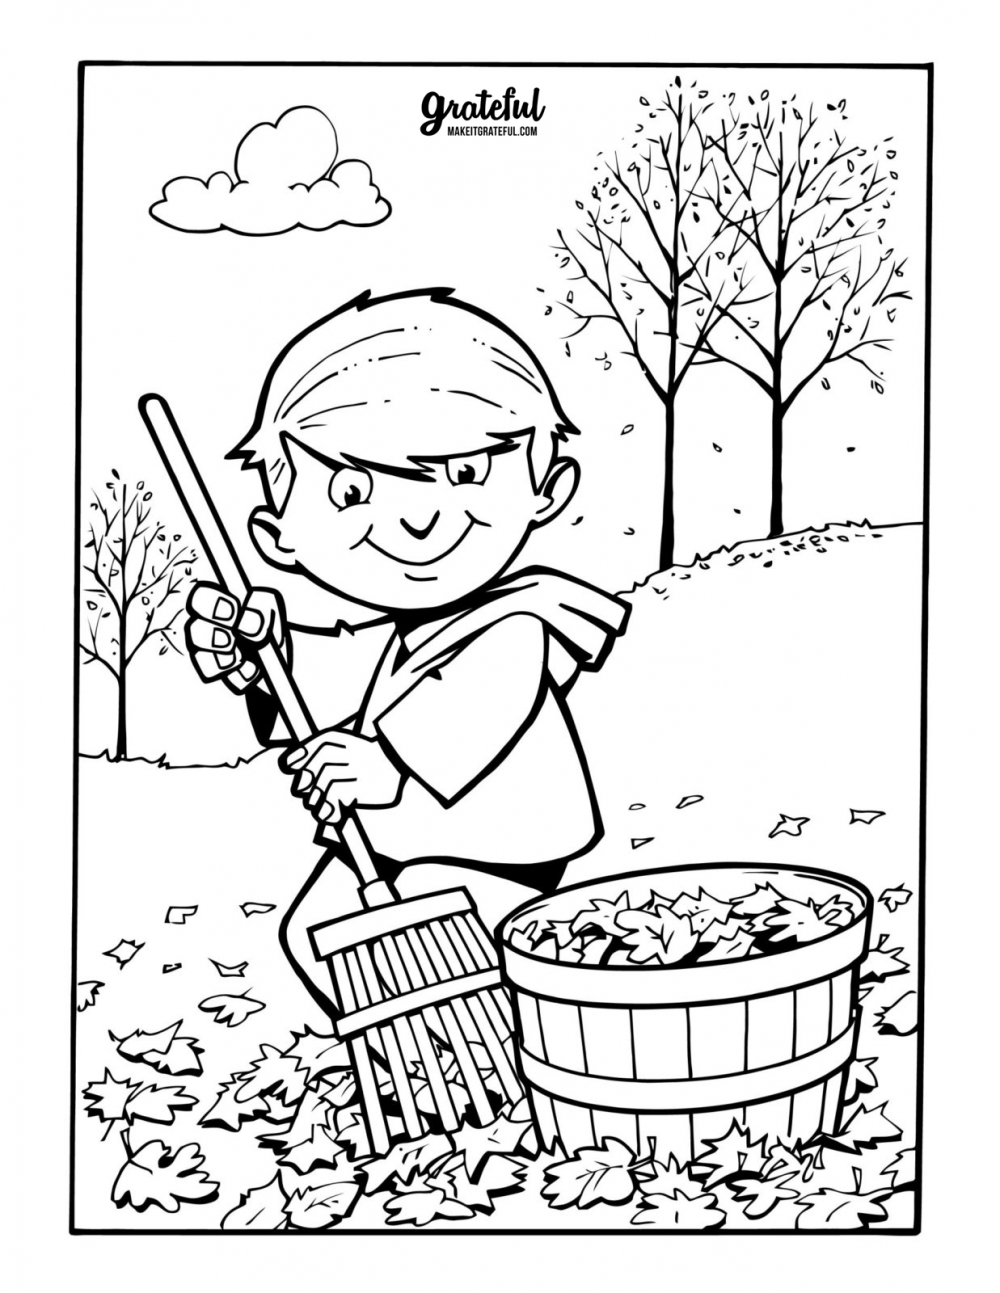 Boy raking leaves - Thanksgiving coloring pages